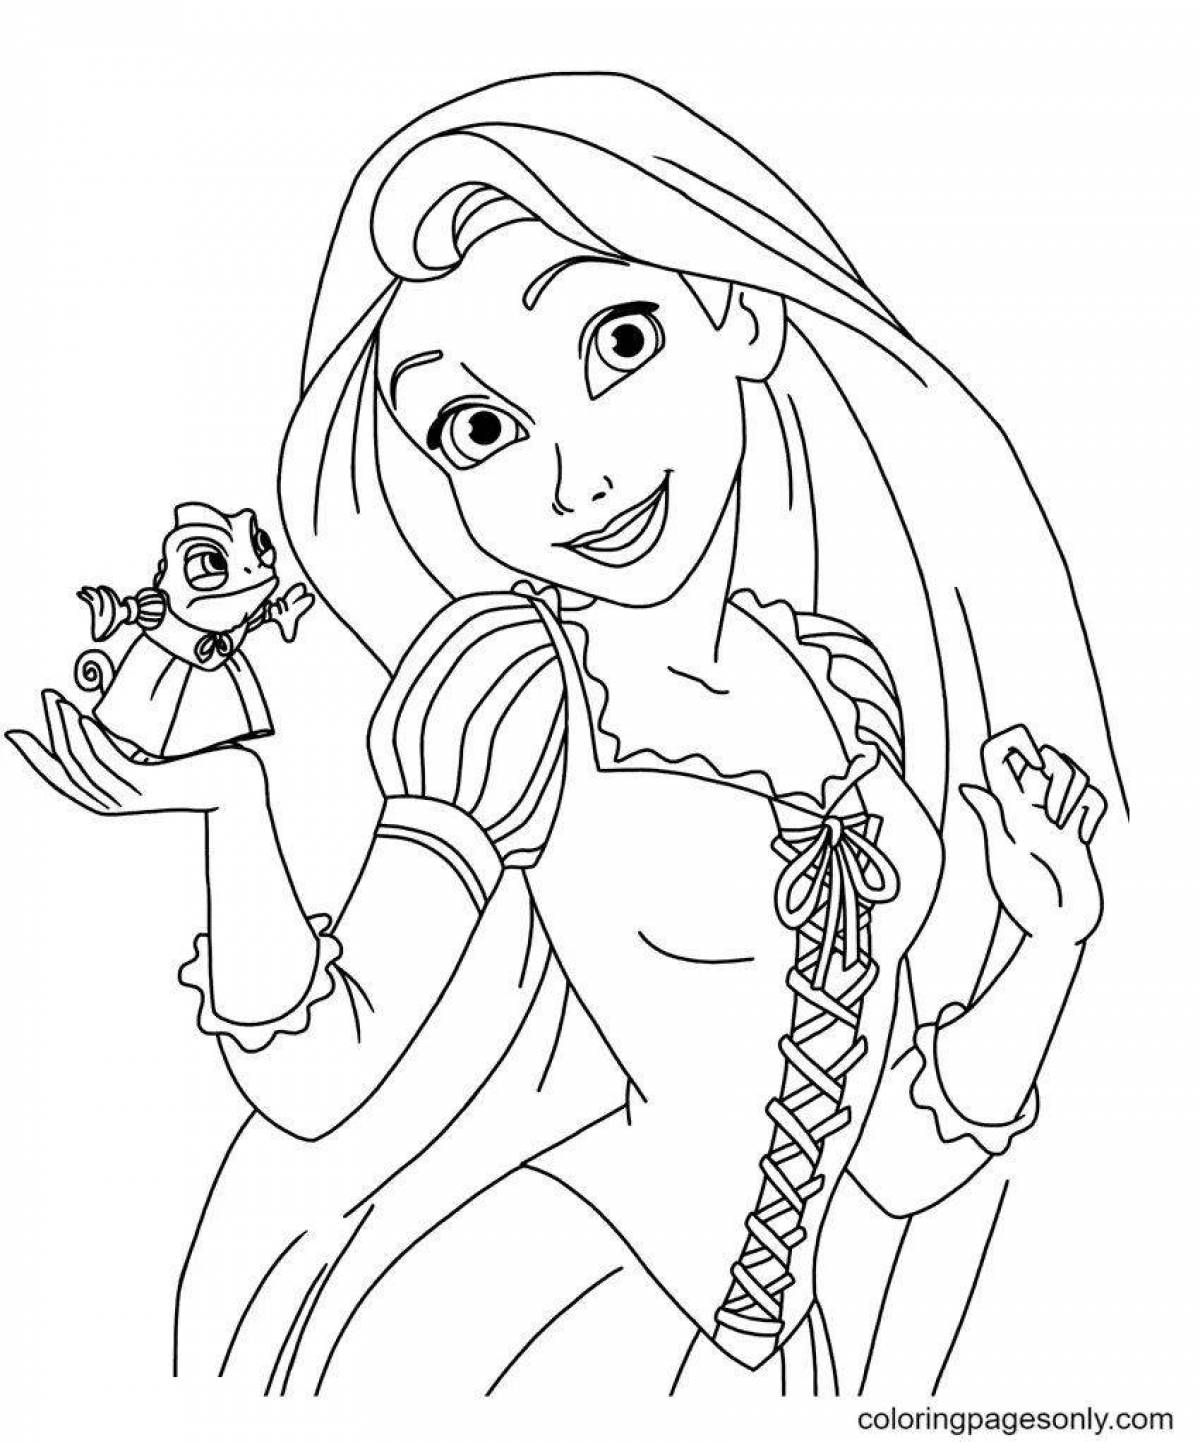 Dreamy princess rapunzel coloring book for kids